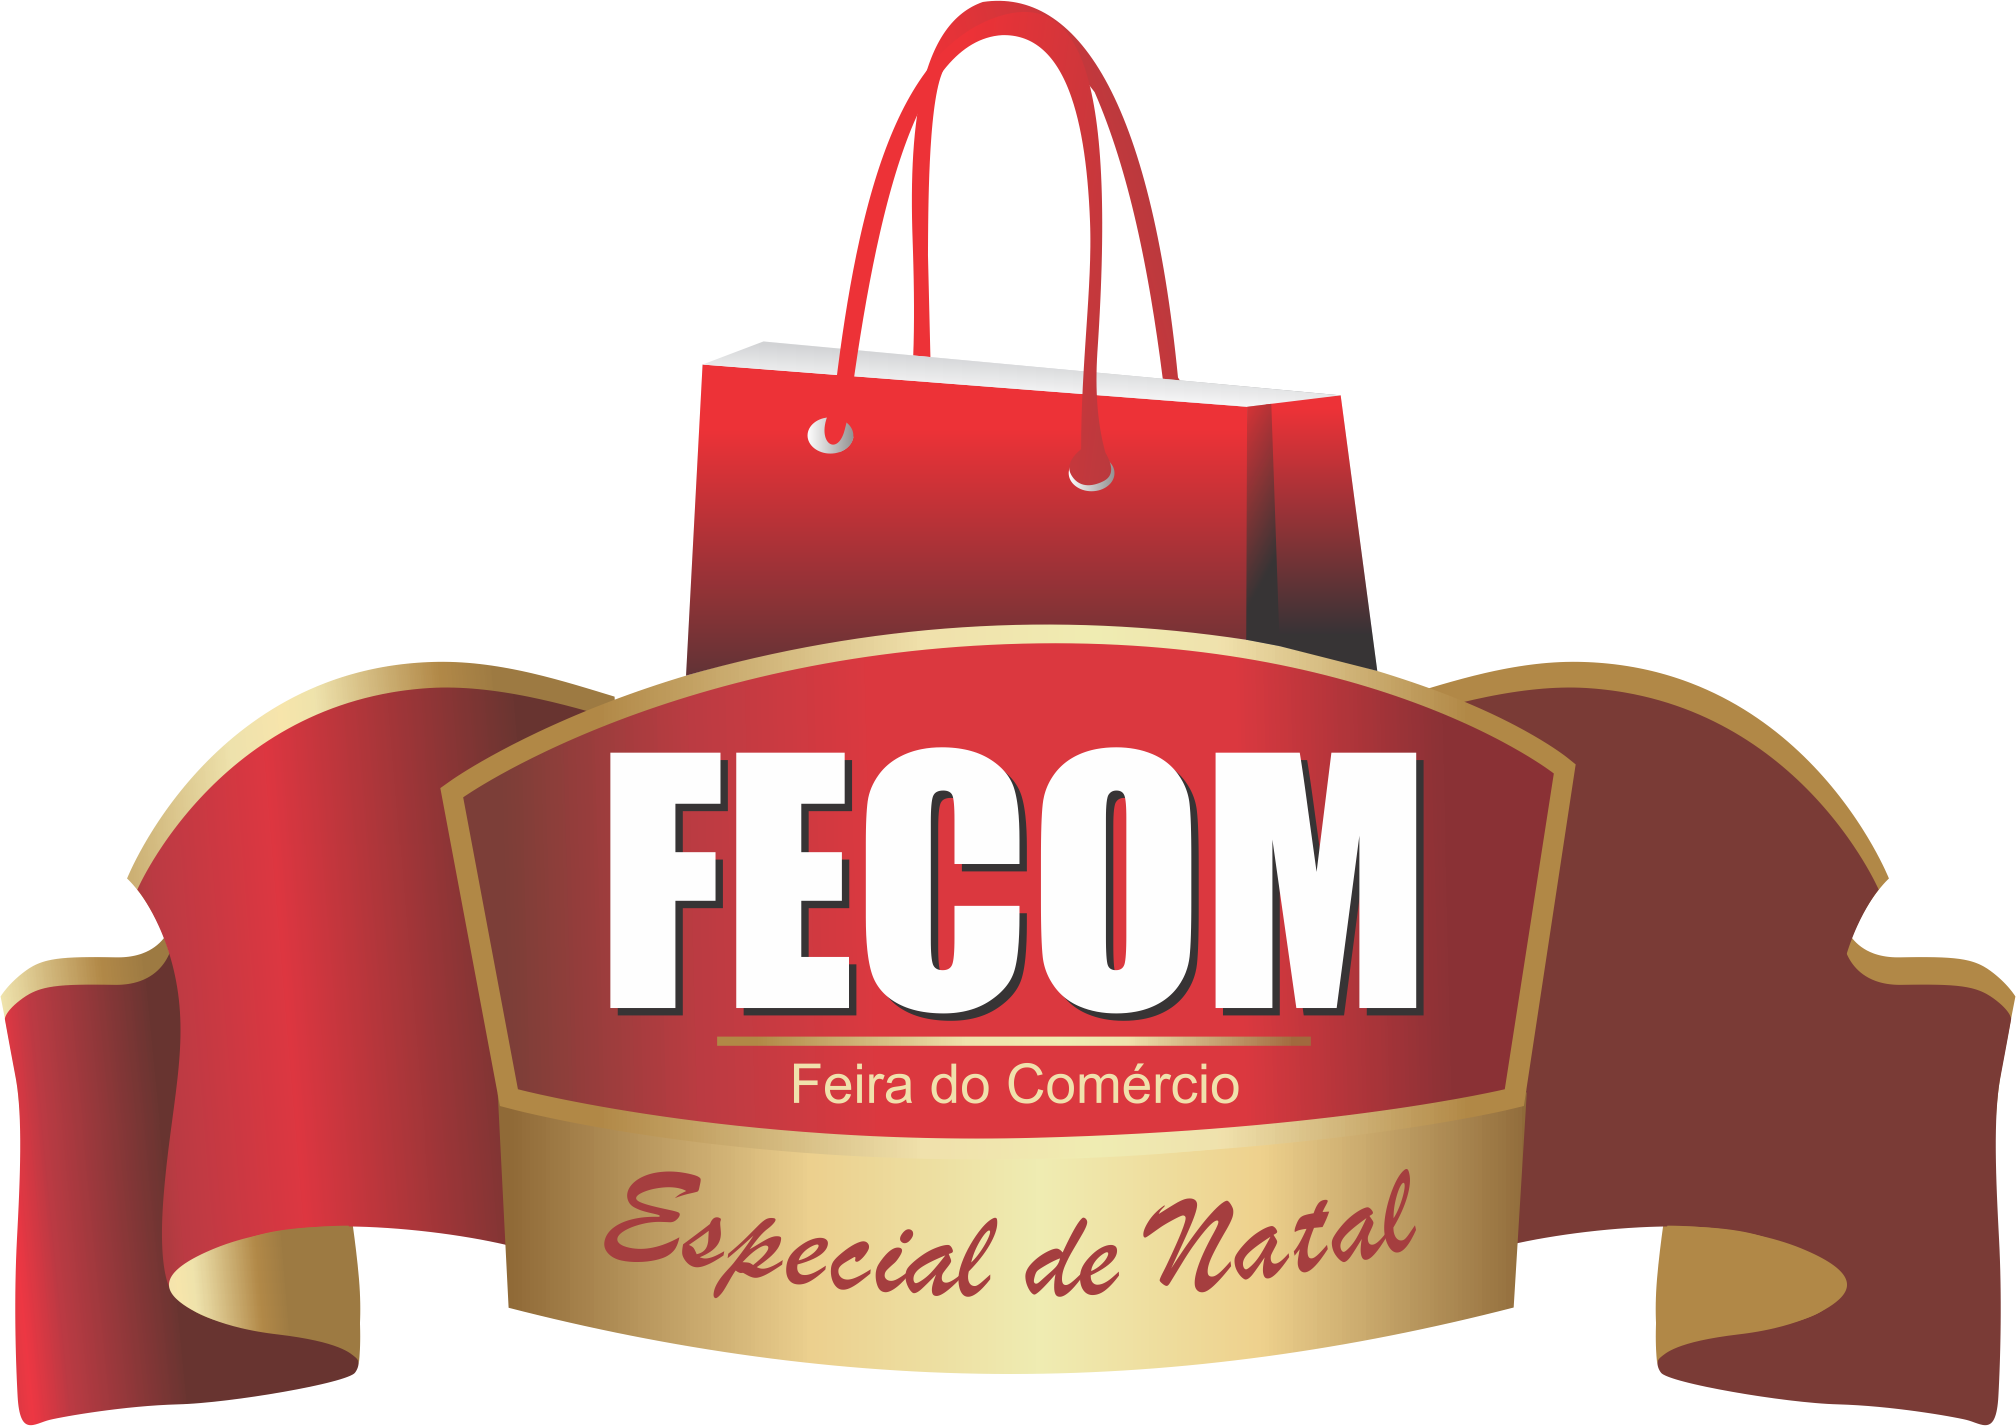 Fecom - Feira do Cómercio 2012